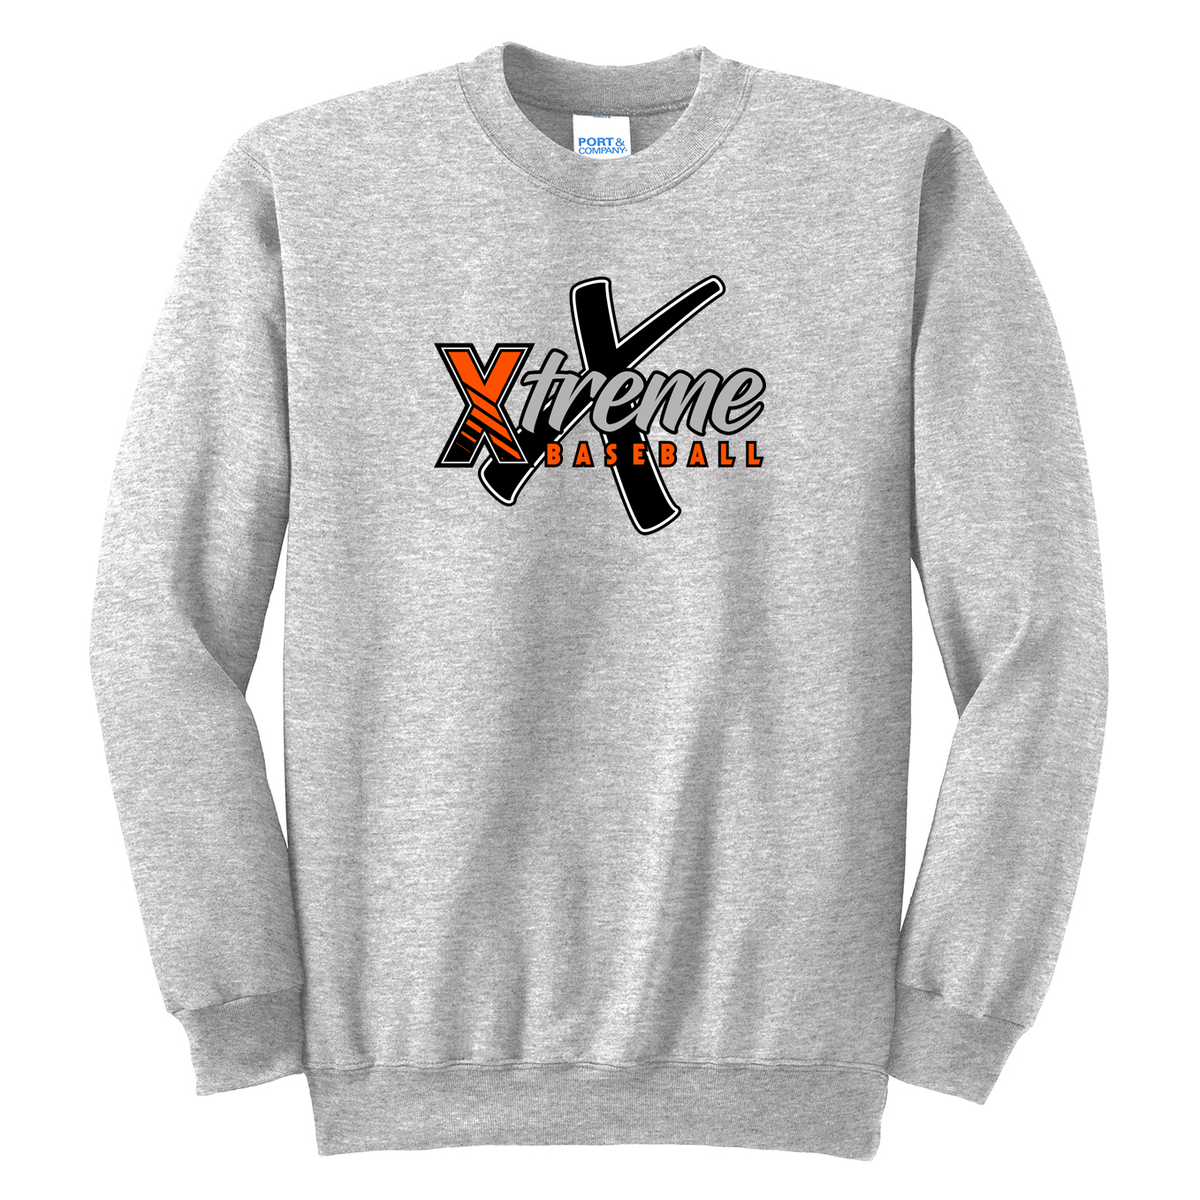 Xtreme Baseball Crew Neck Sweater